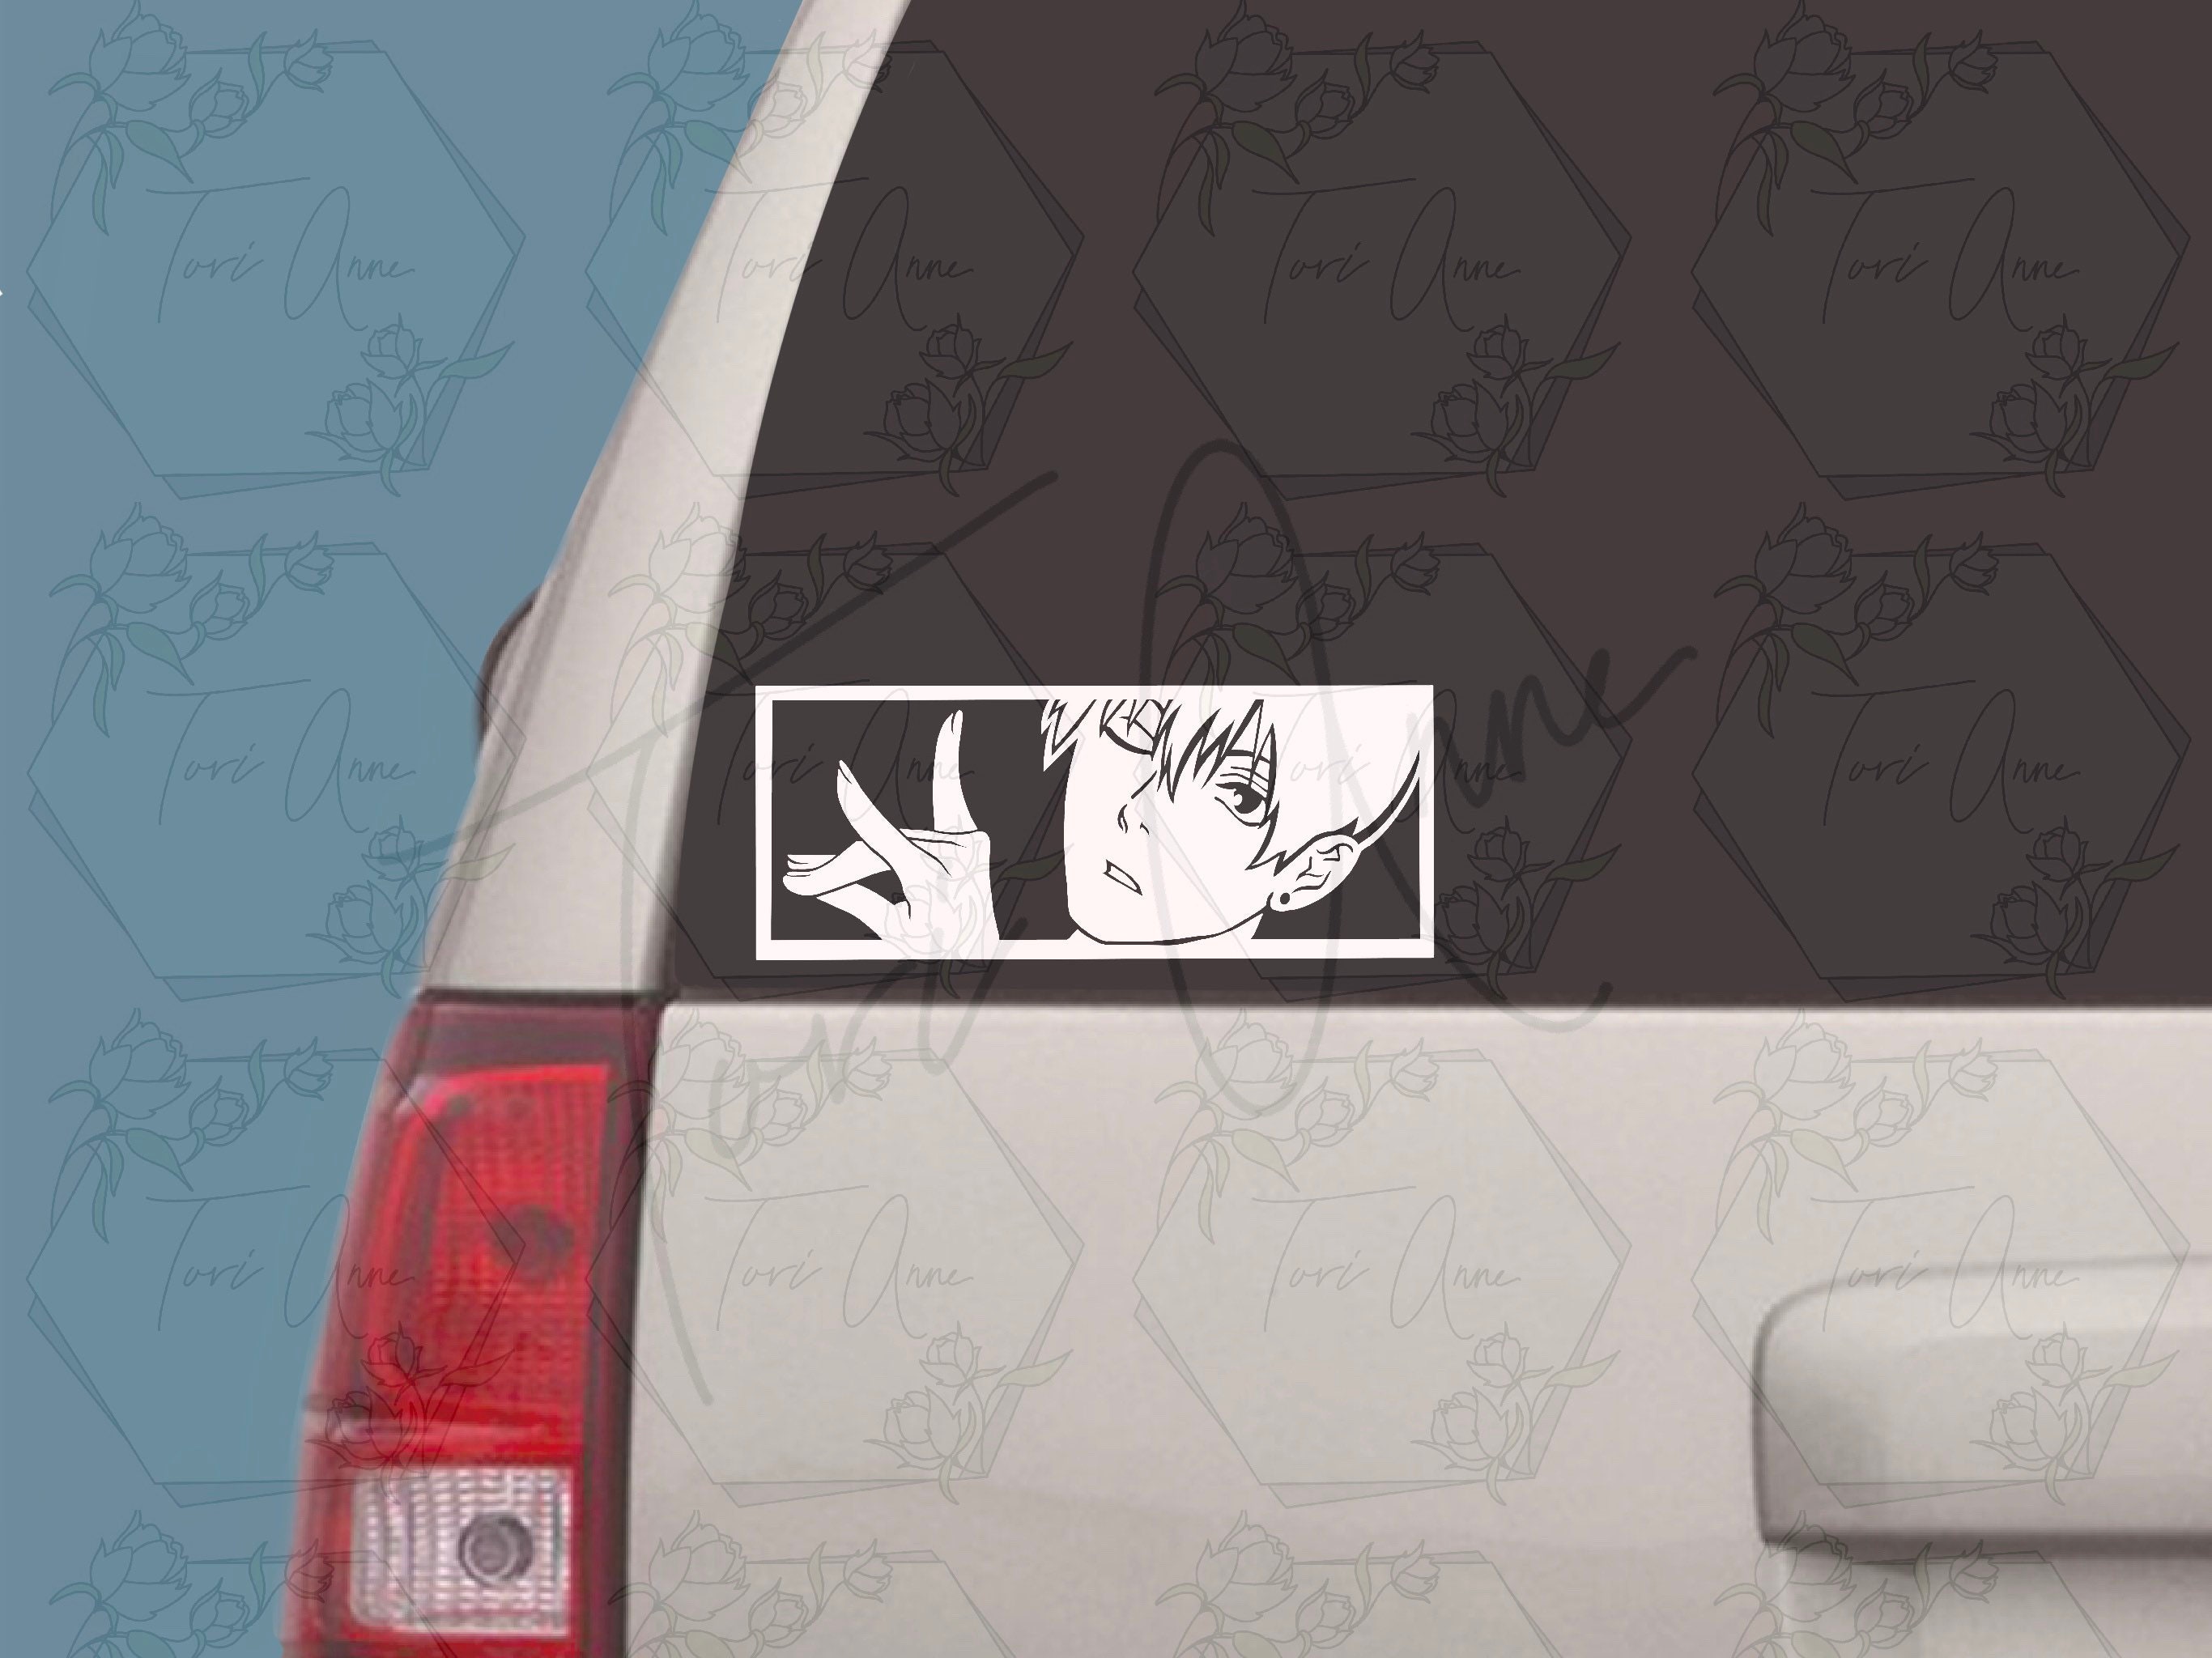 Himeno Chainsaw Man 03 Weatherproof Anime Sticker 6 Car Decal